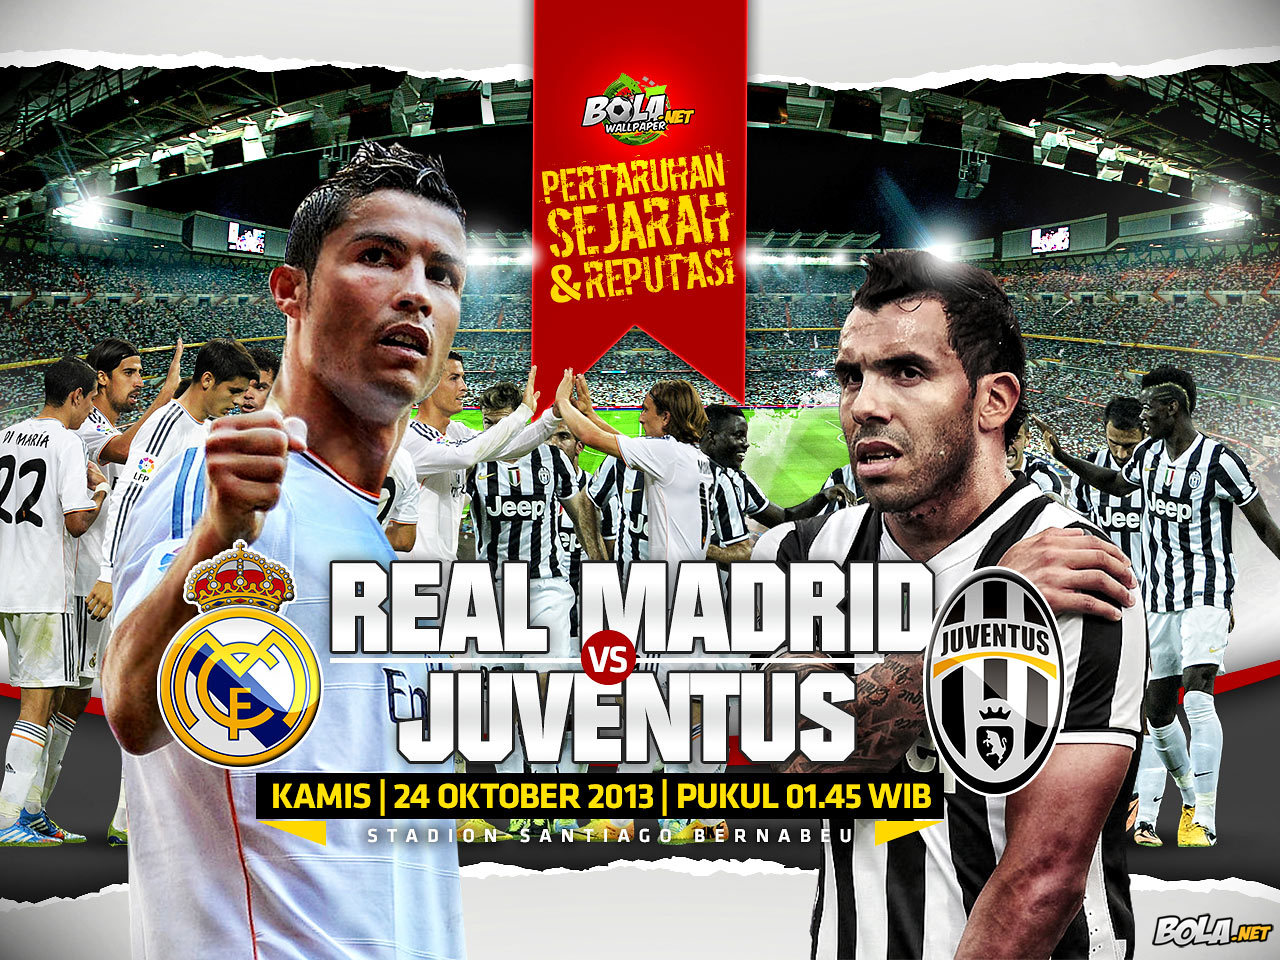 Download Wallpaper Real Madrid Vs Juventus Bolanet